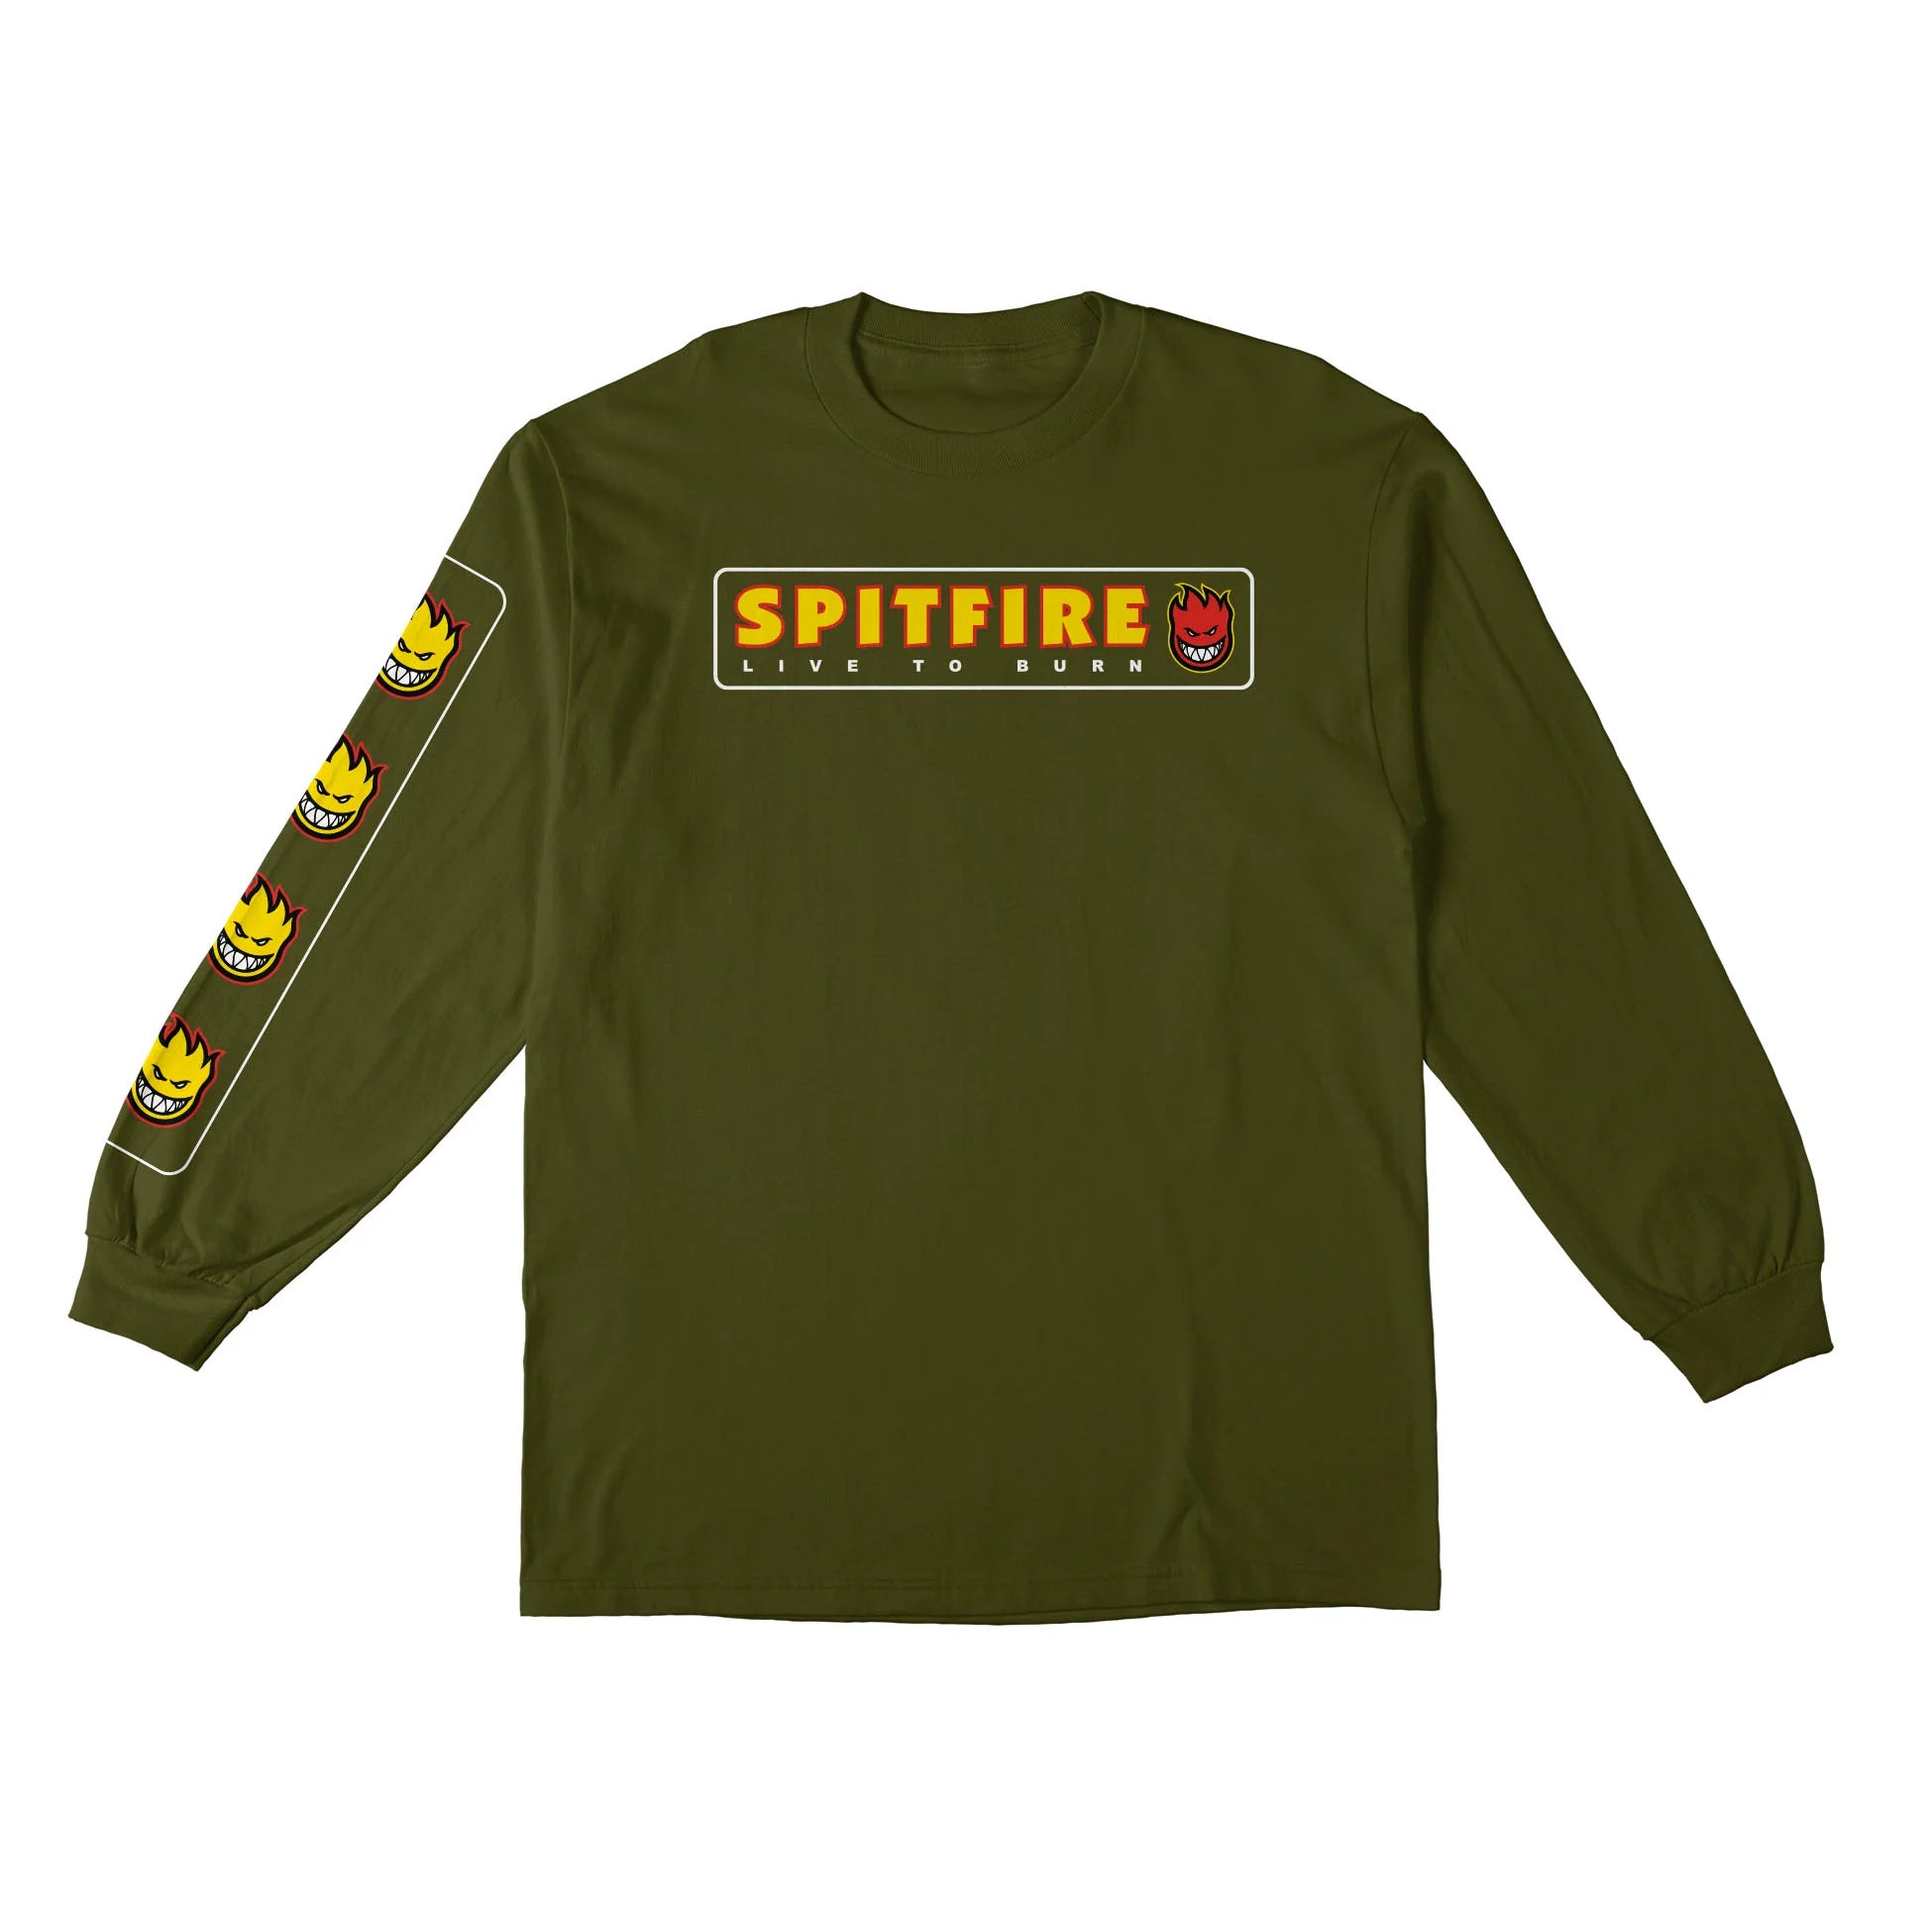 Military Green Live to burn Spifire Shirt